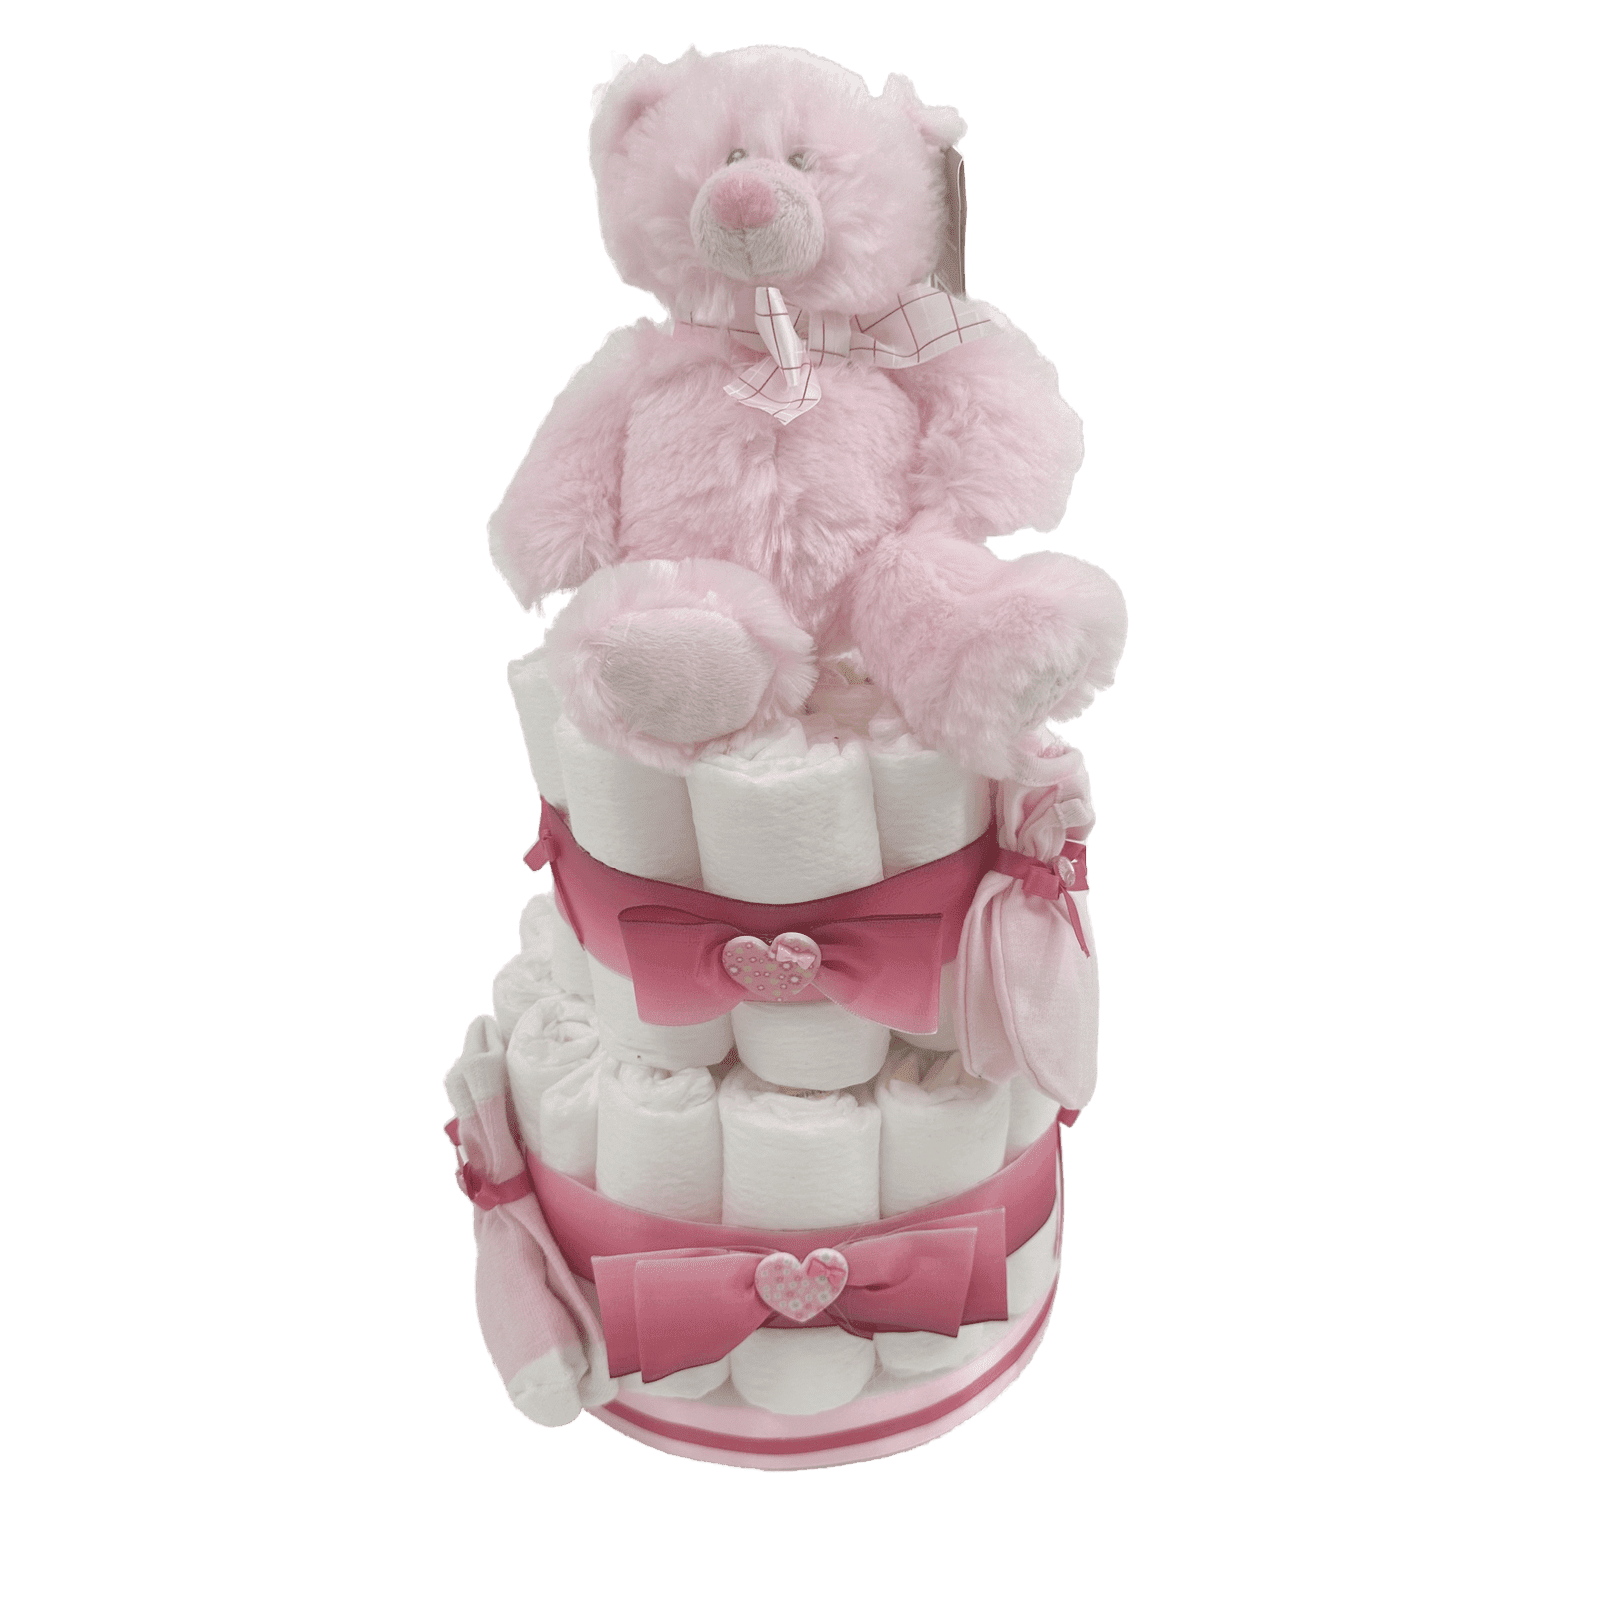 Gold & Blush Pink Diaper Cake for Baby Girl / Baby Shower Centerpiece Gift  Decoration / Flower Elegant Princess Themed Diaper Cake - Etsy